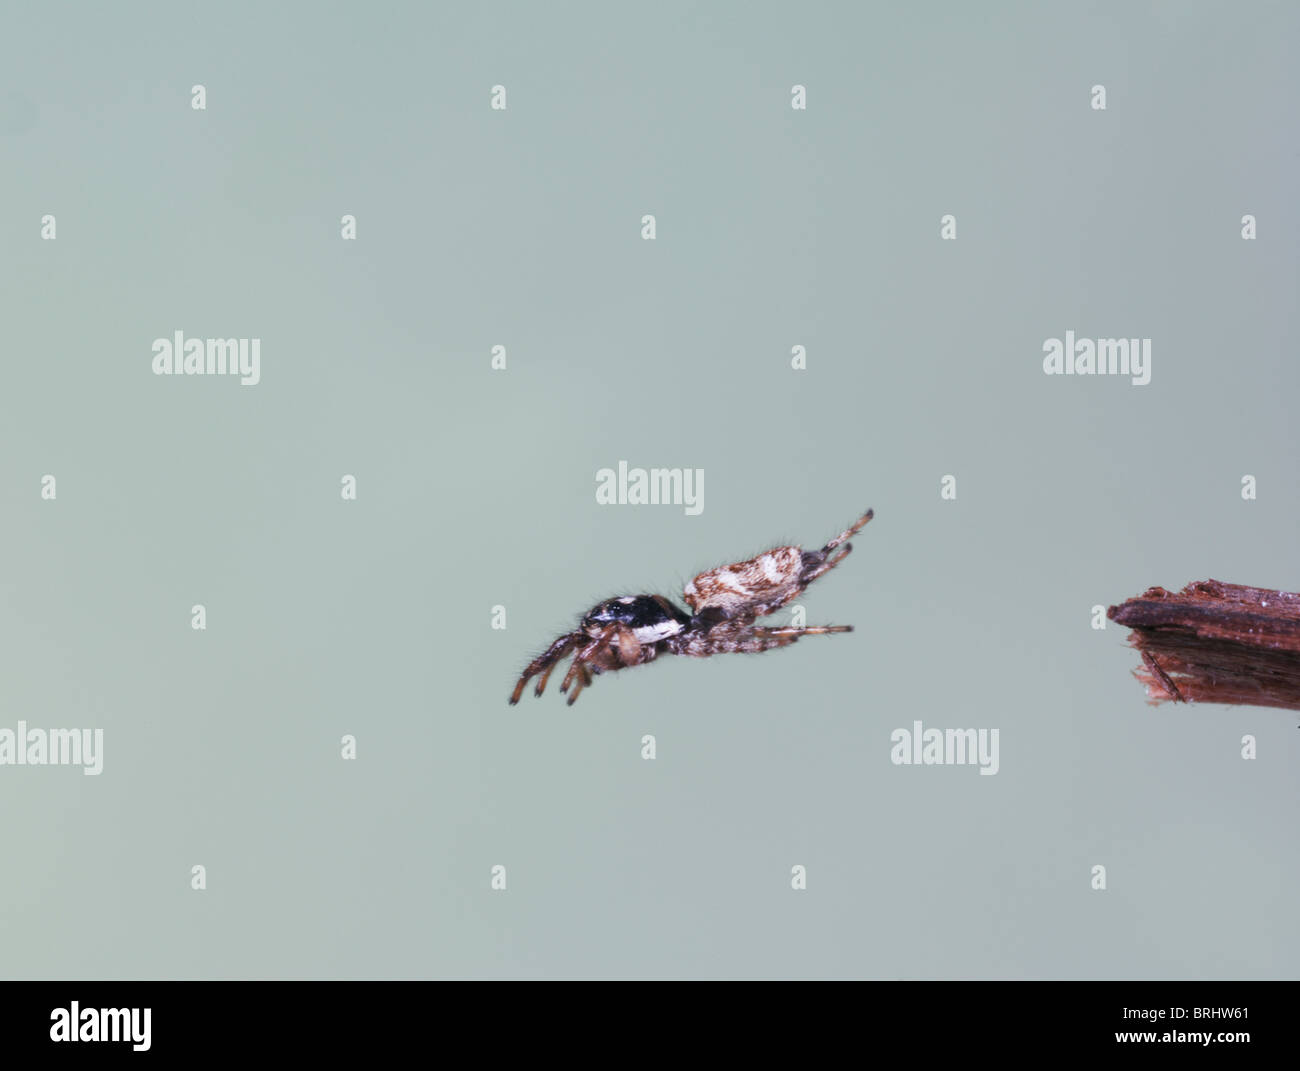 Zebra jumping spider ( Salticus scenicus ) Jumping Stock Photo